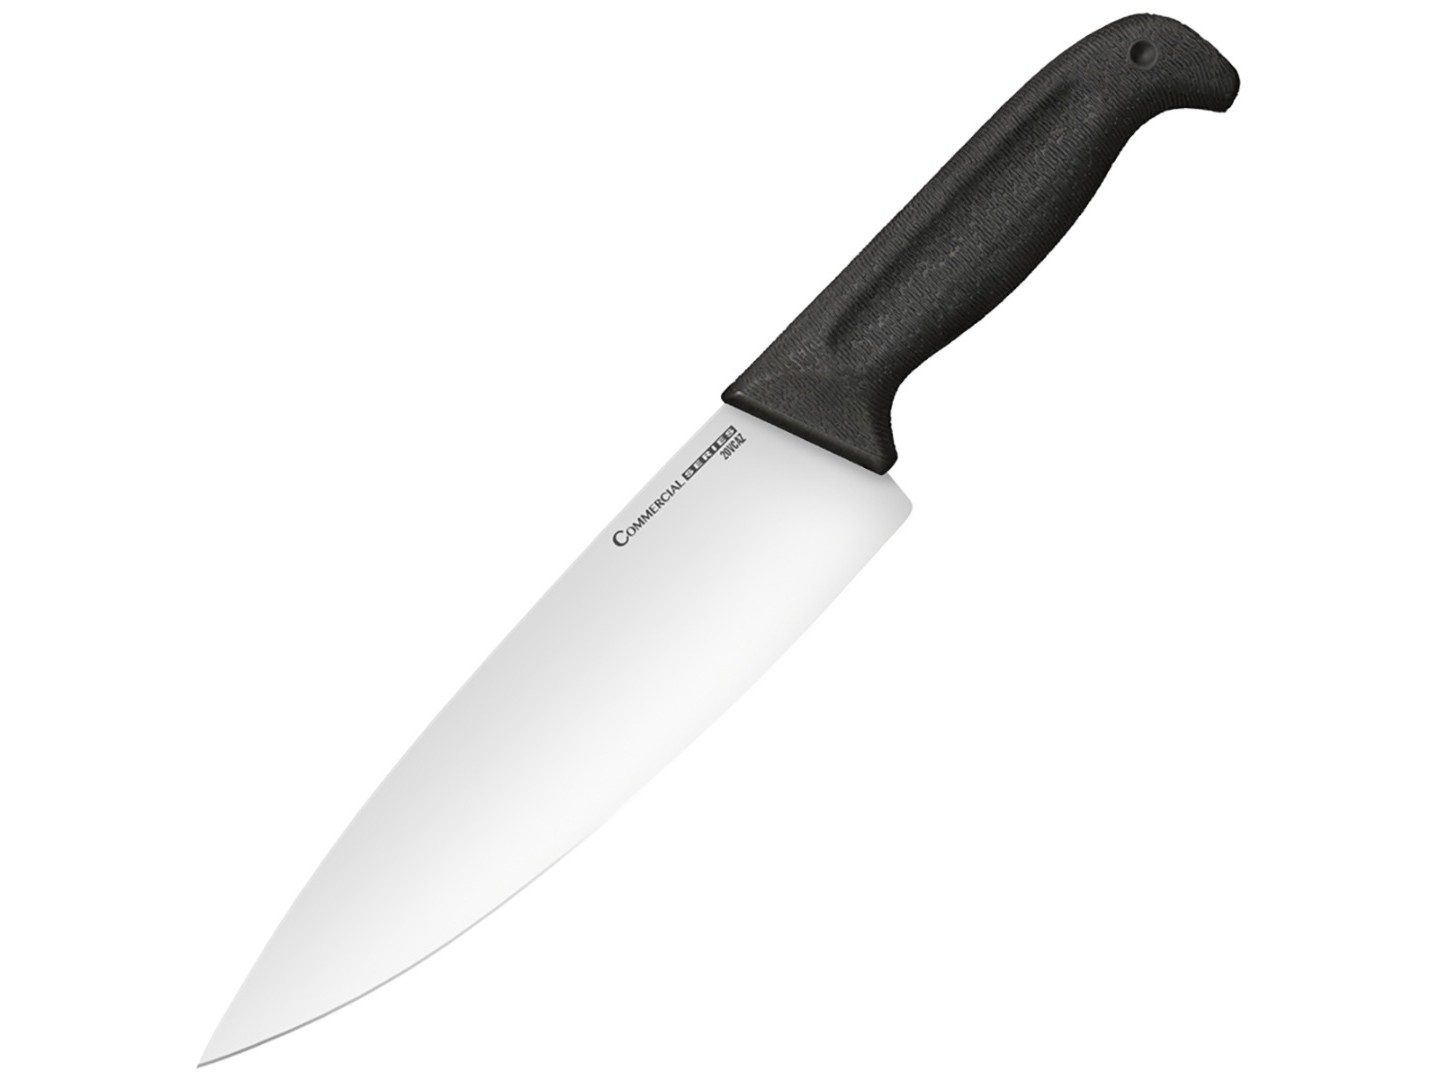 Кухонный нож Cold Steel Chef's Knife 8" (Commercial Series) 20VCAZ сталь 1.4116 рукоять Kray-Ex